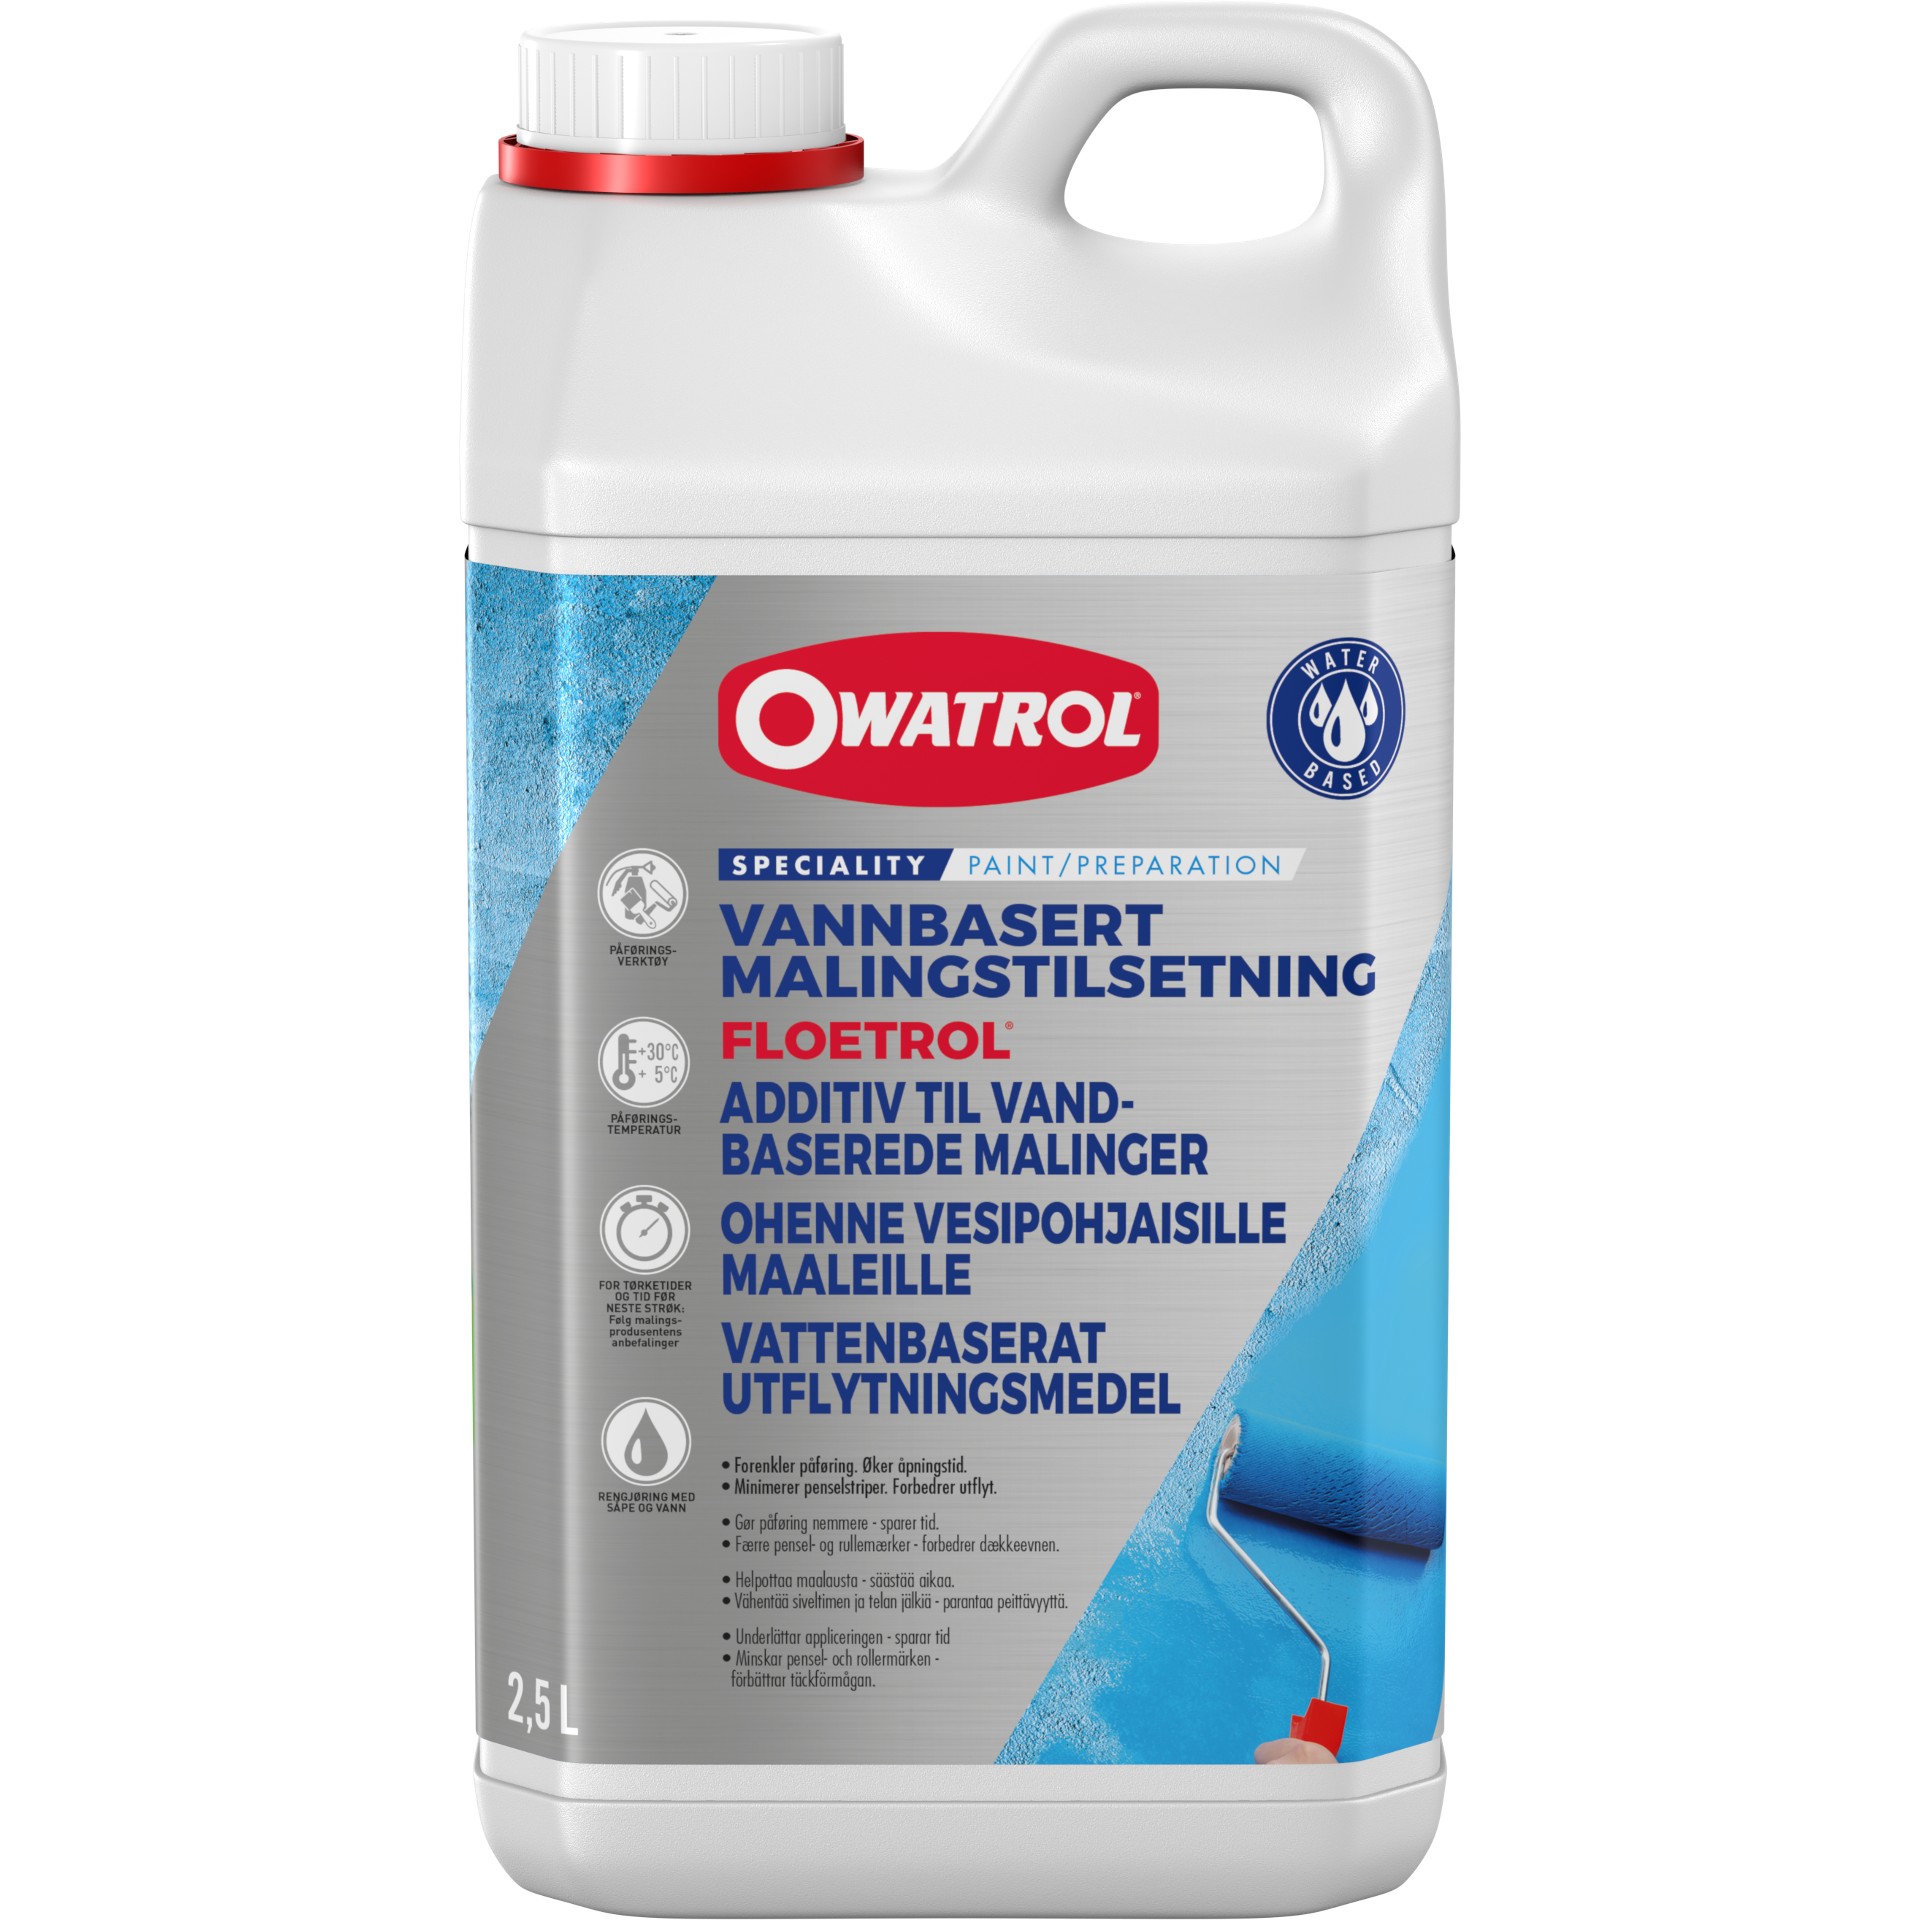 Owatrol UK - 📣 #Owatrol Floetrol is now available in 500ml